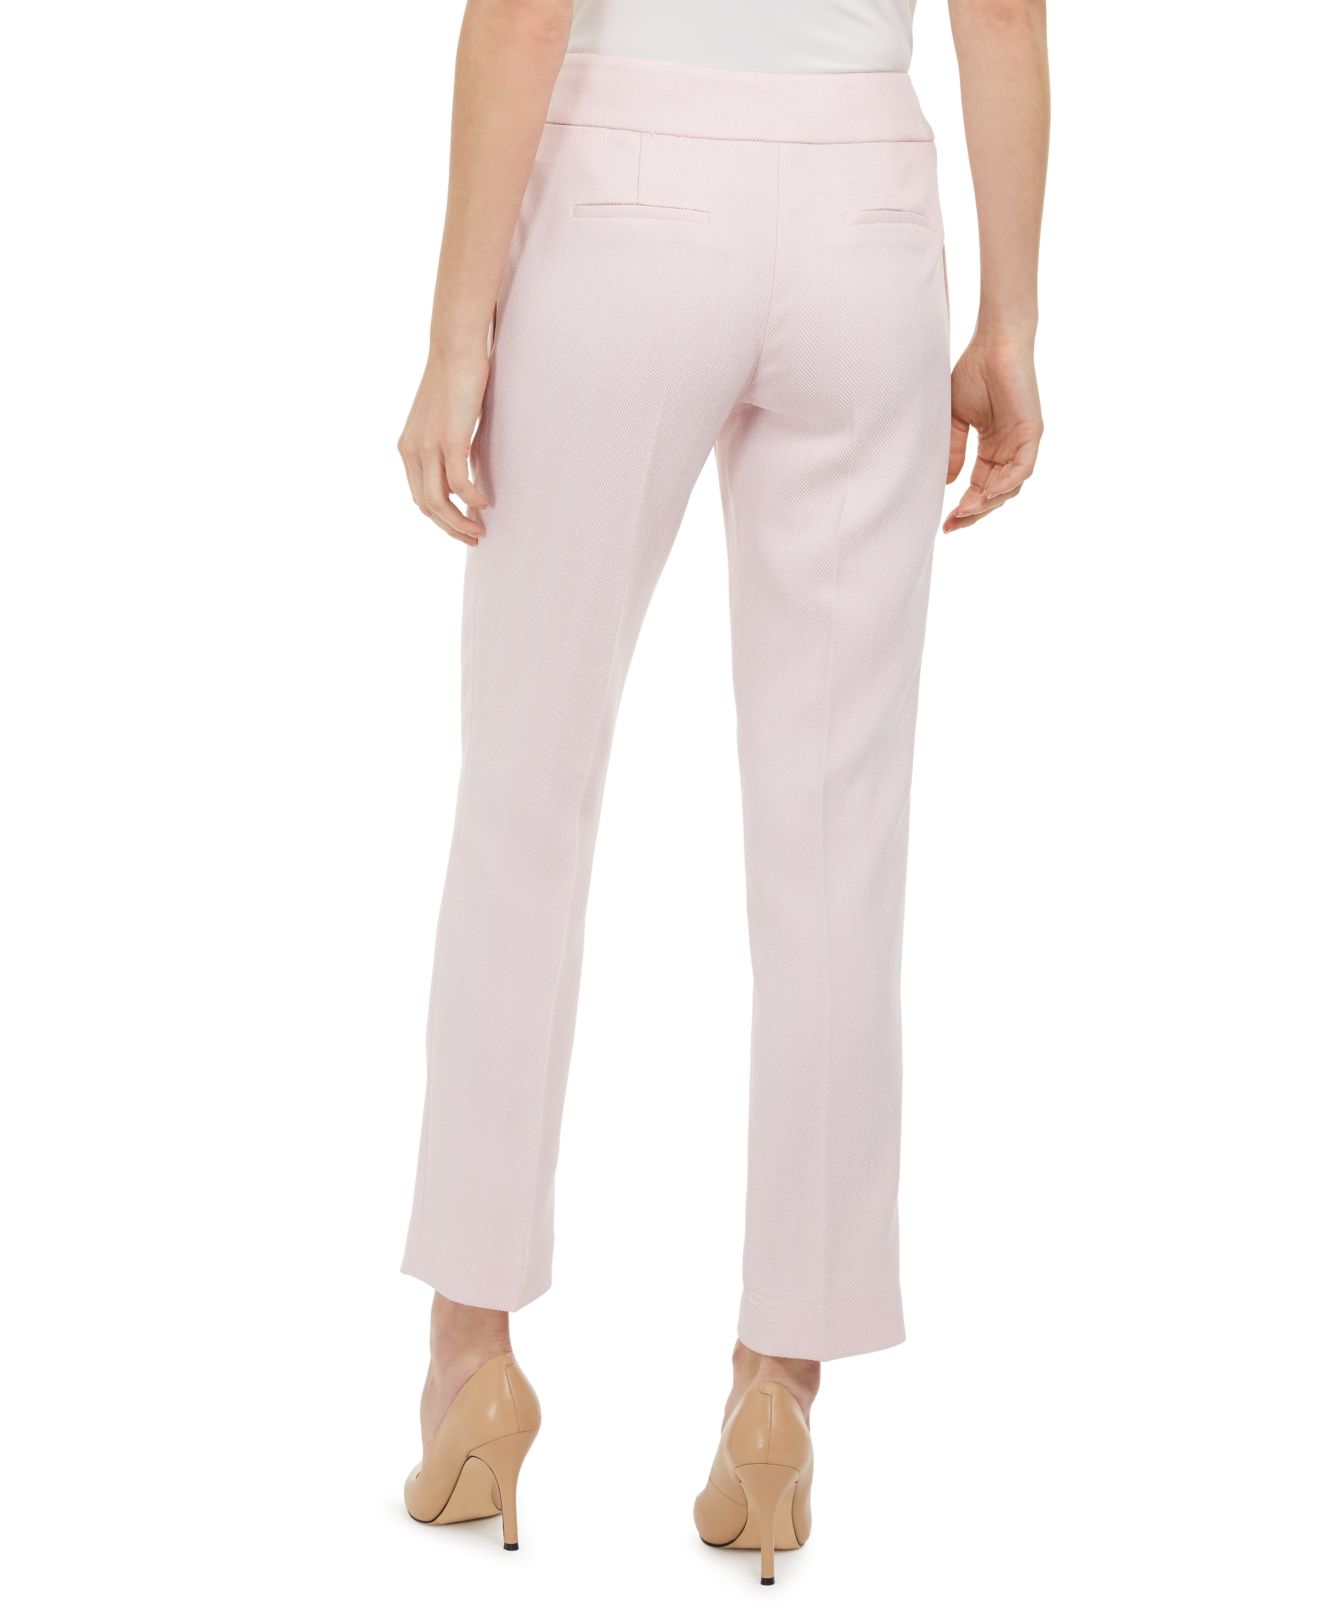 Kasper Women's Dress Pants Tutu  Chevron-Print Textured Pink Size 6